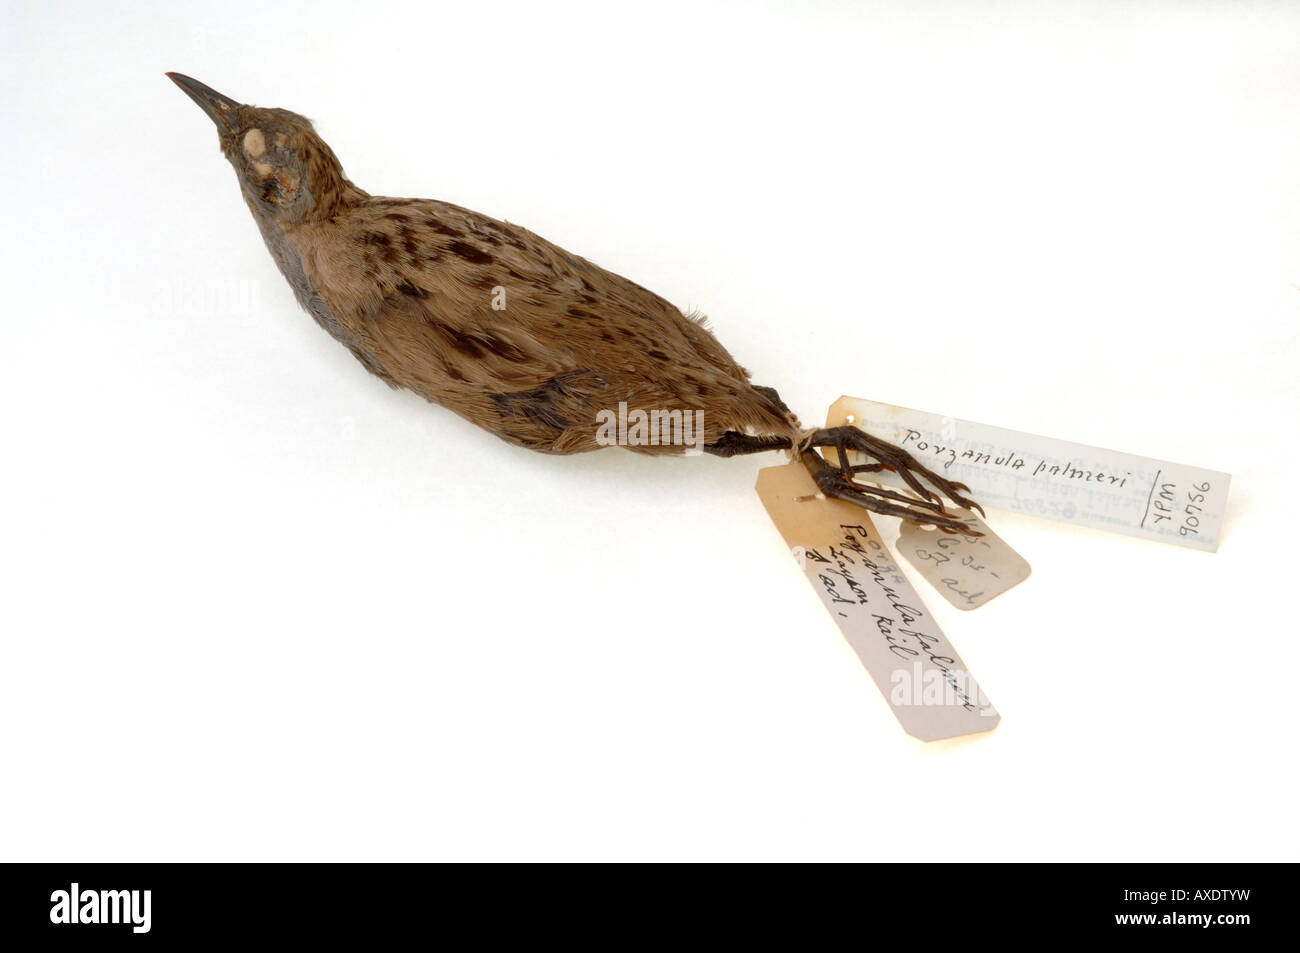 Extinct bird, Porzana palmeri, Laysan Rail, YPM 90756, Yale Peabody Museum collection Stock Photo